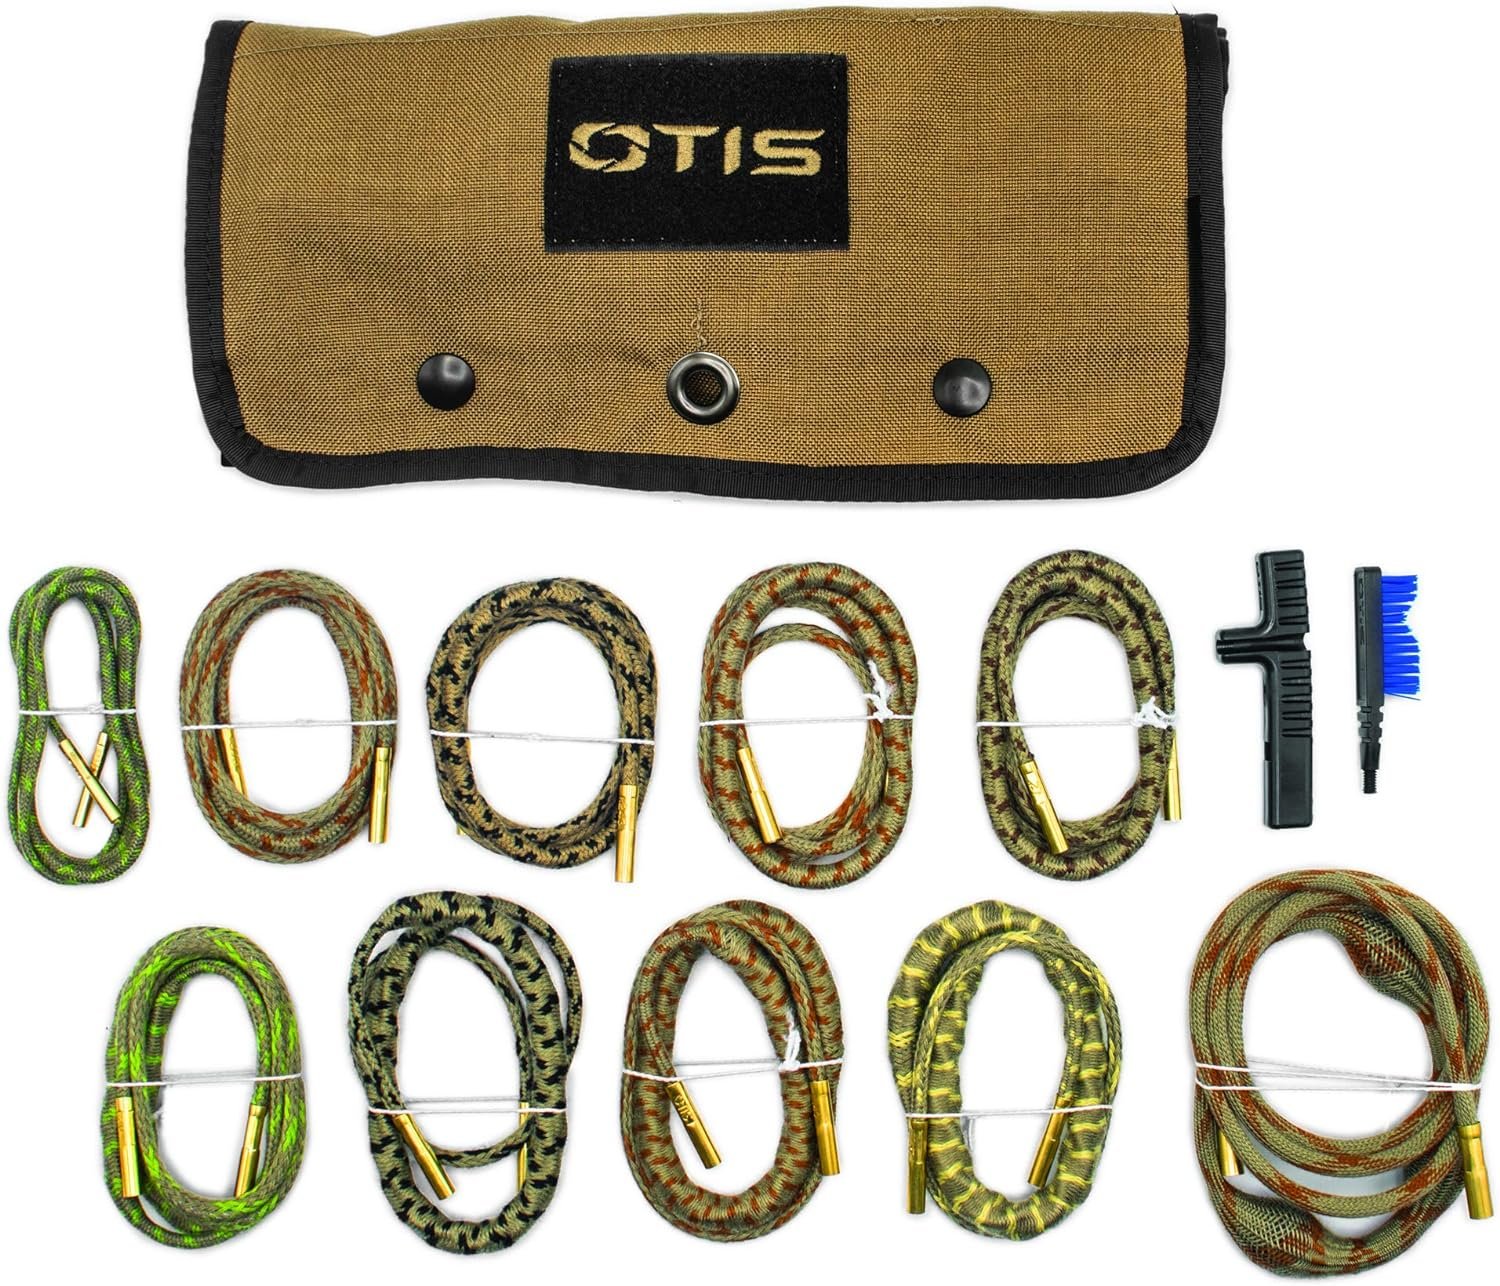 Otis Ripcord Multi-Caliber 10 Pack review